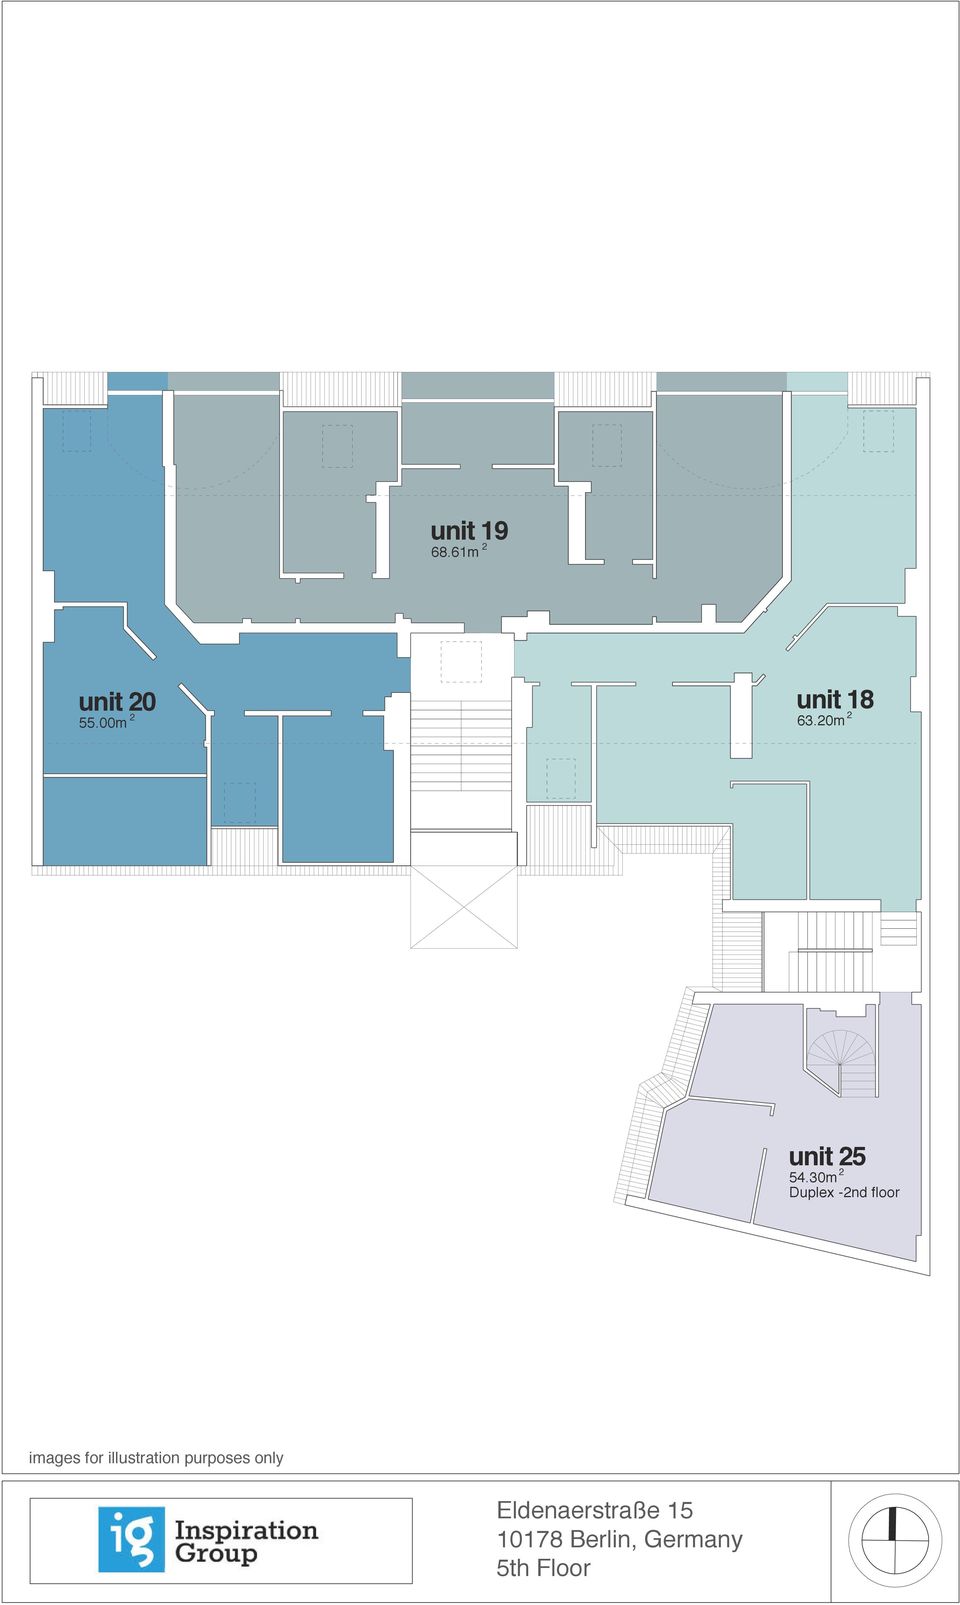 30m Duplex -2nd floor images for